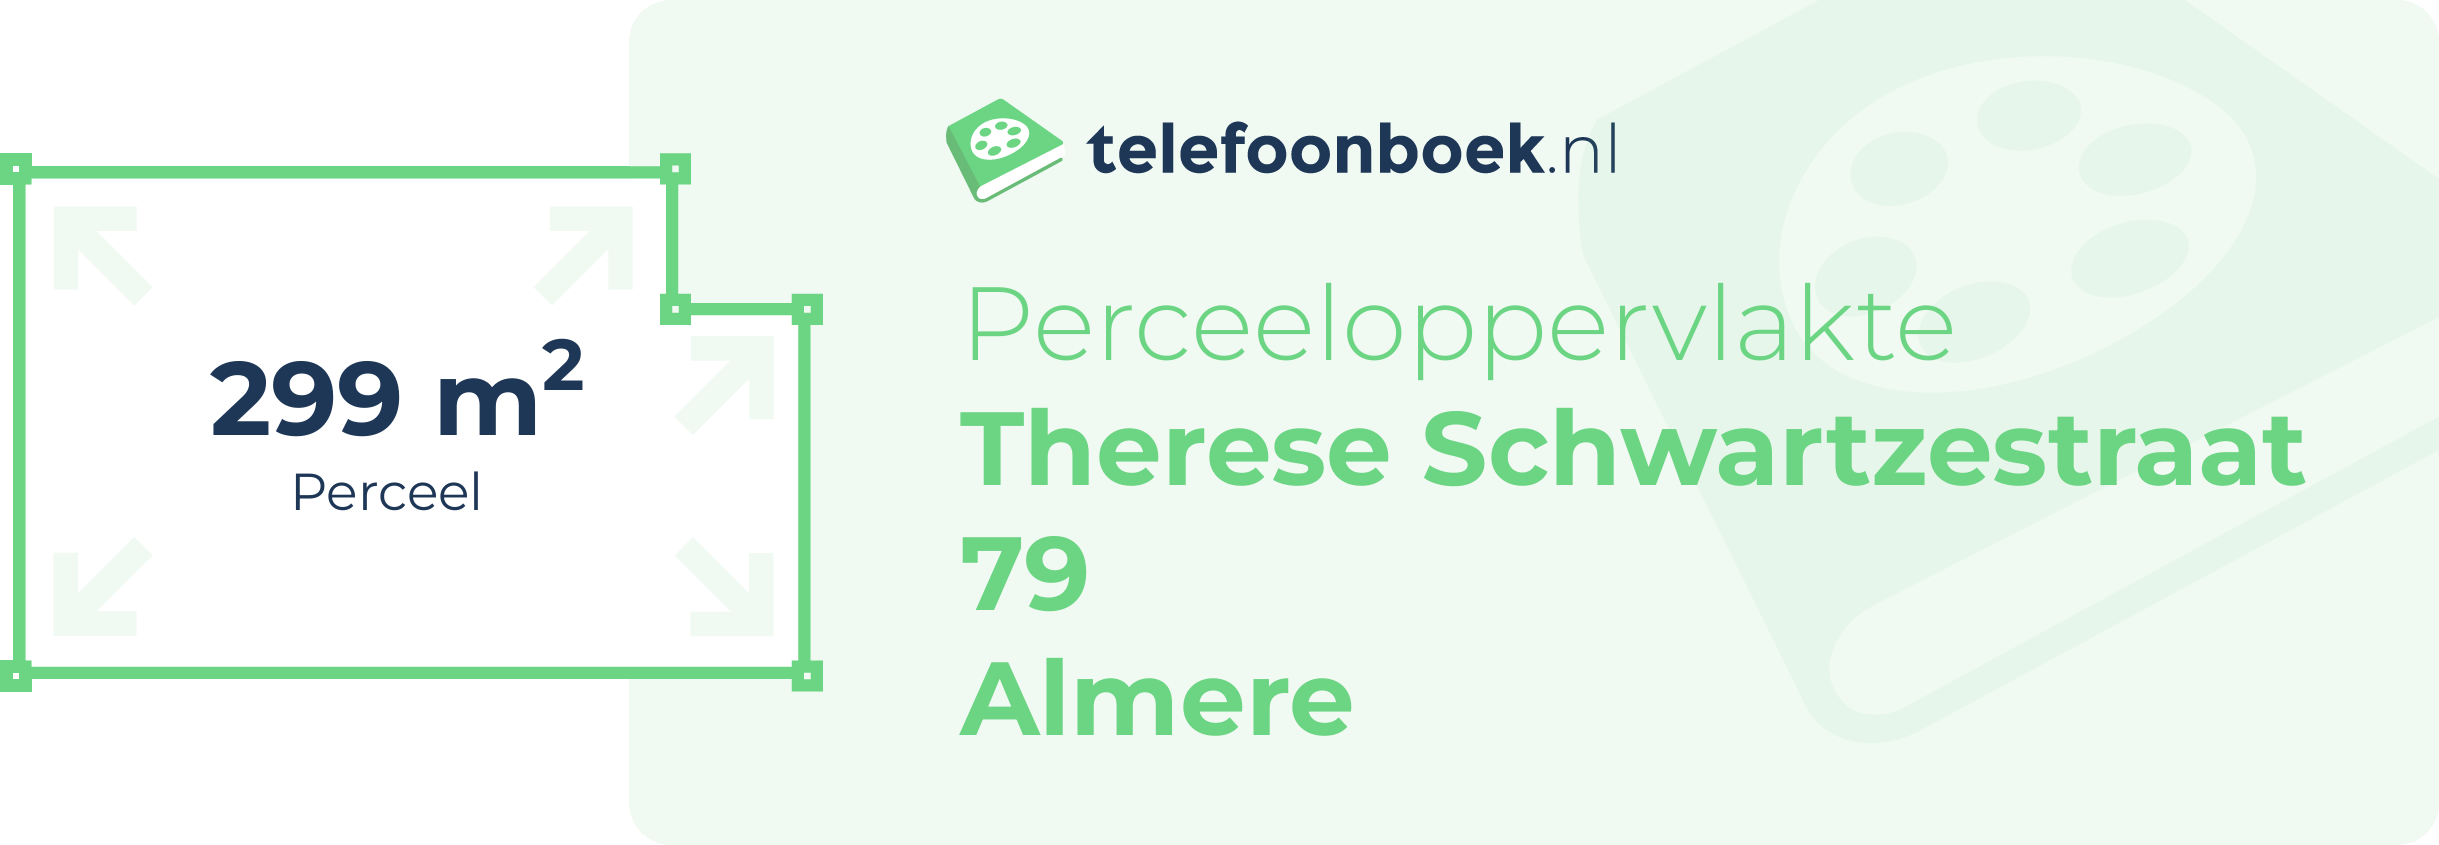 Perceeloppervlakte Therese Schwartzestraat 79 Almere